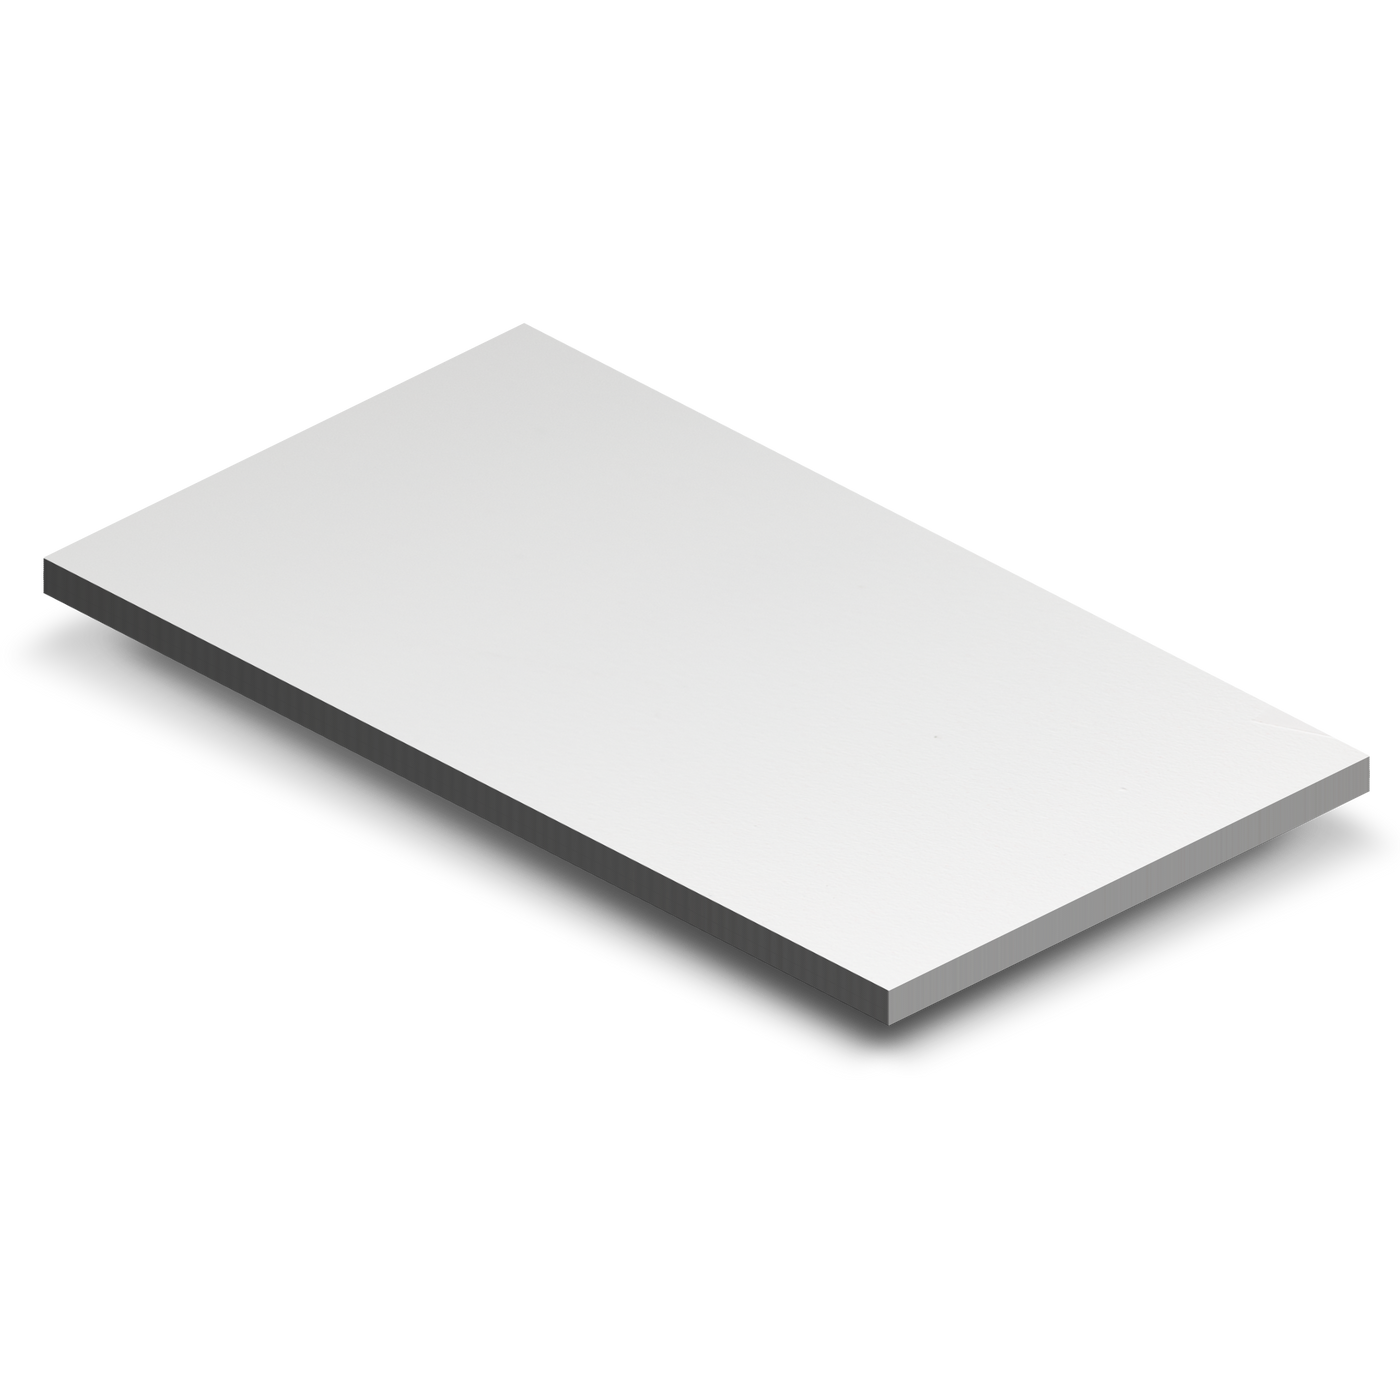 3 x 5 White Matte Sample (CS-WM)